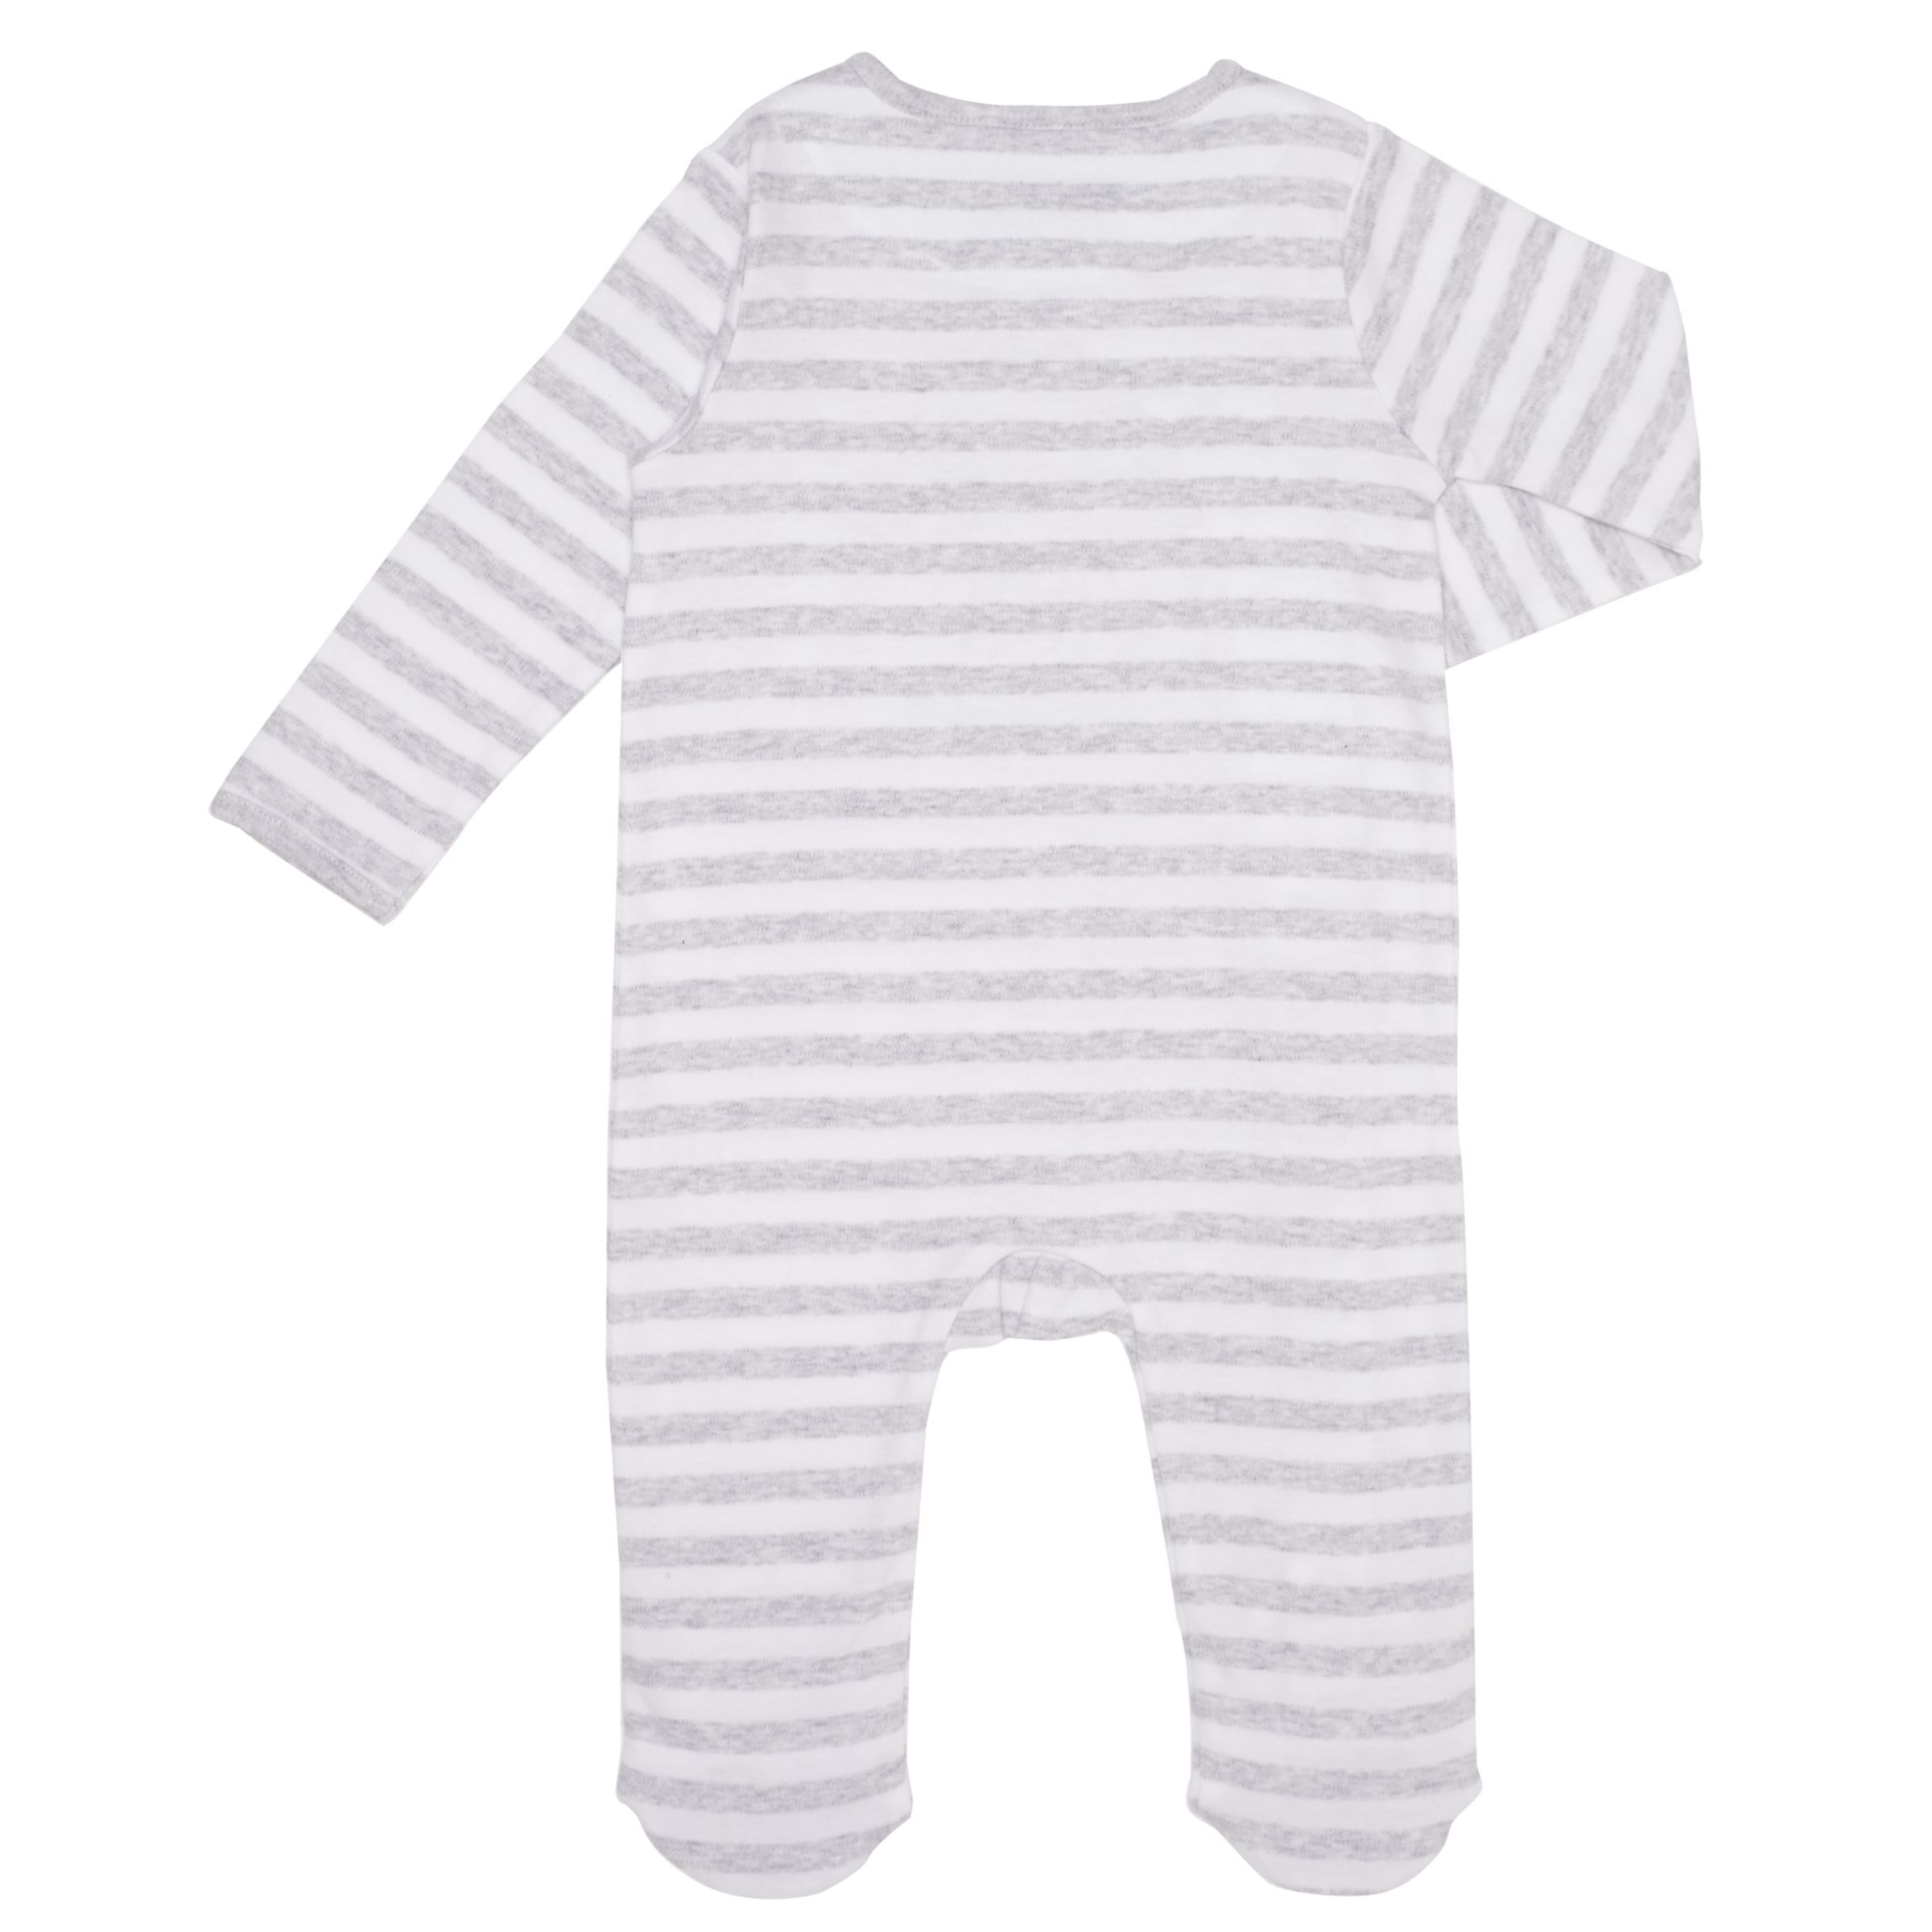 John Lewis & Partners Baby Zebra Sleepsuit, Grey at John Lewis & Partners